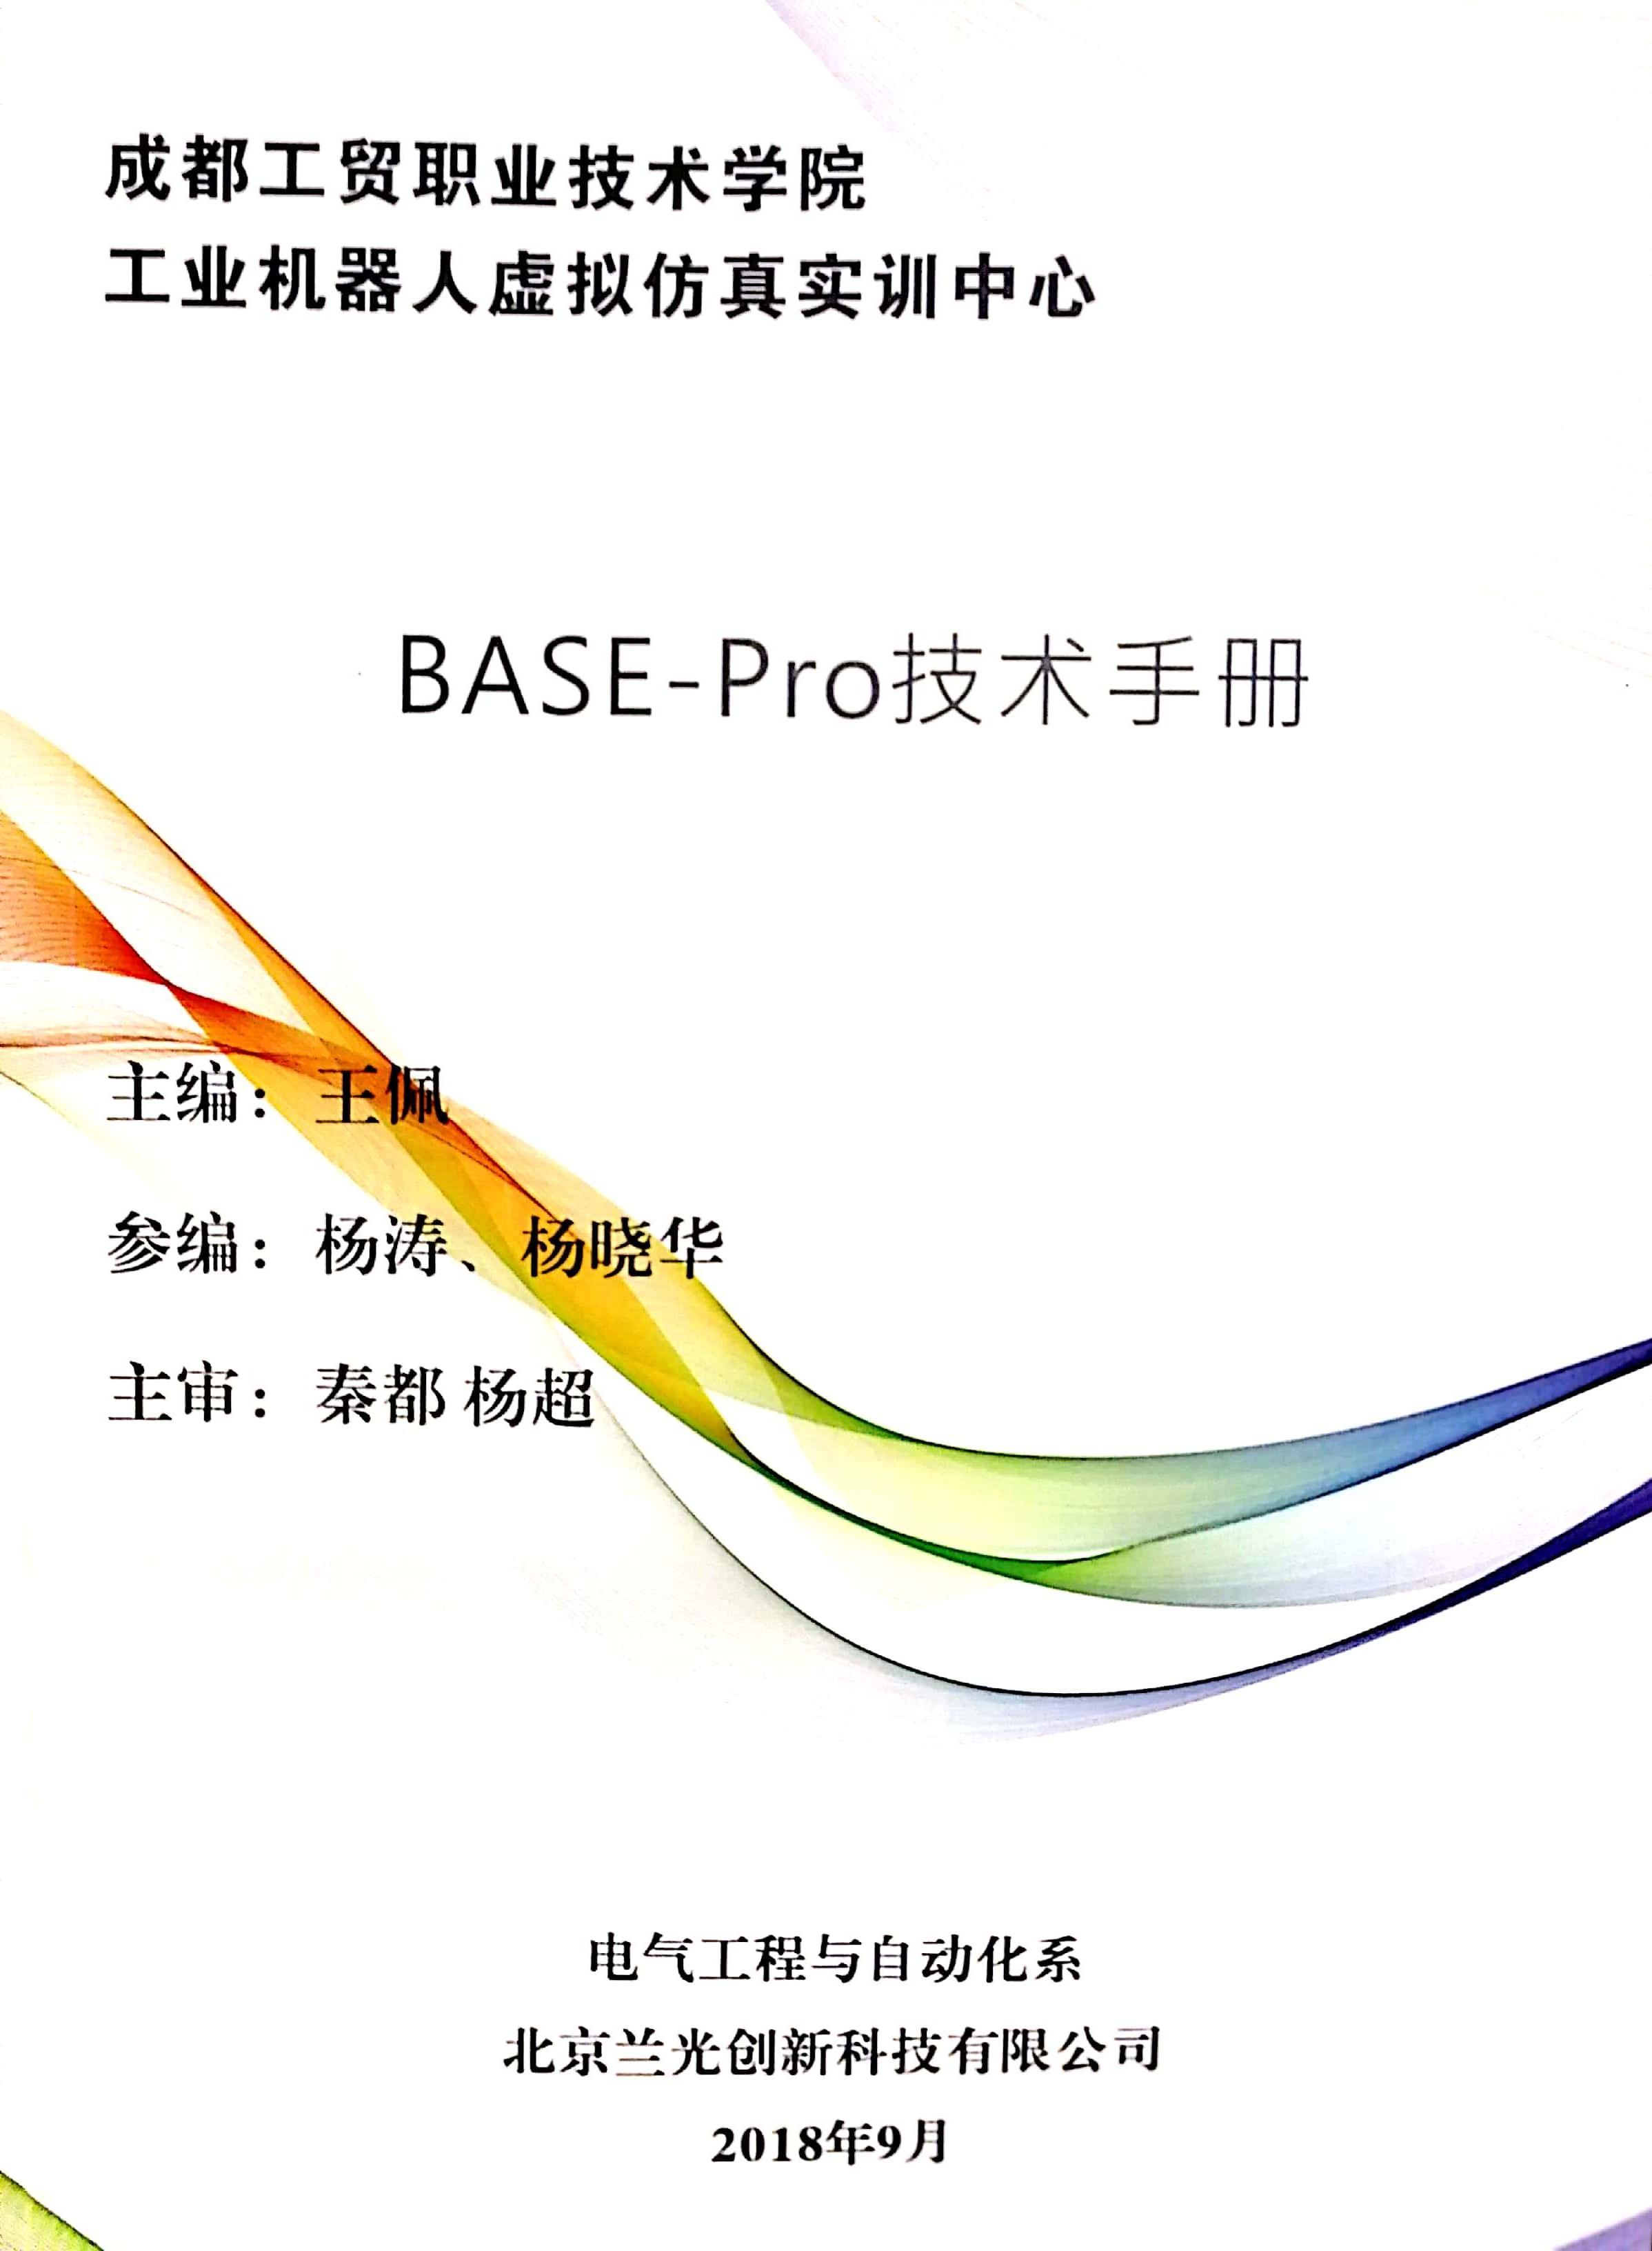 BASE-Pro技术手册.jpg